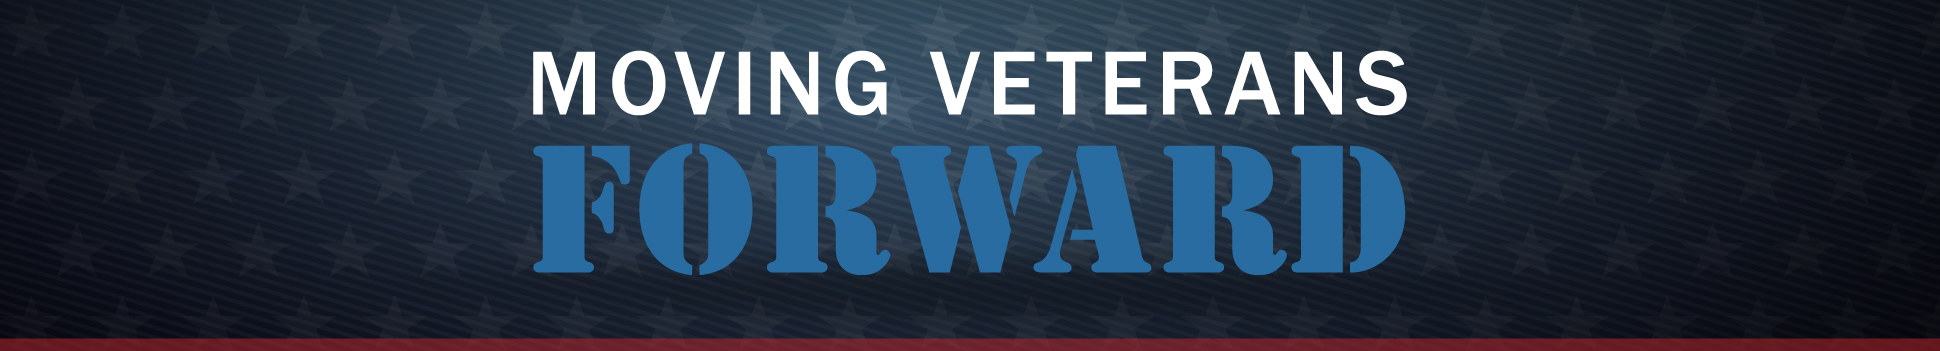 Moving veterans forward